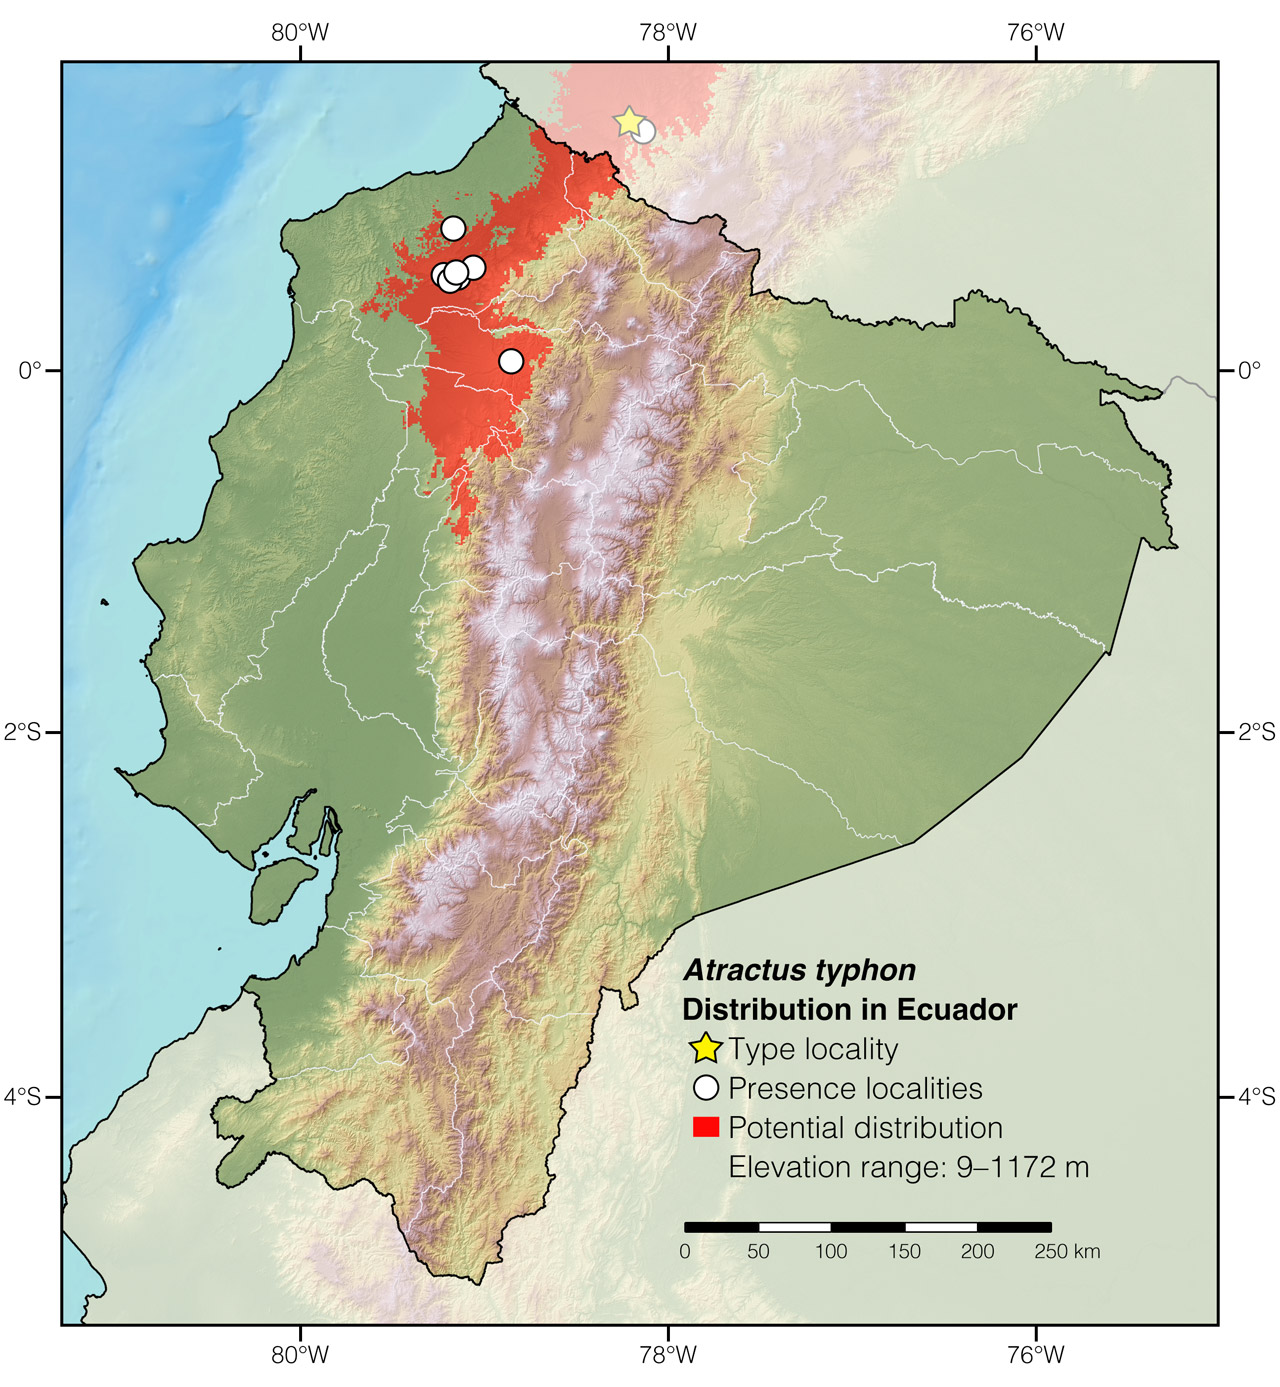 Distribution of Atractus typhon in Ecuador